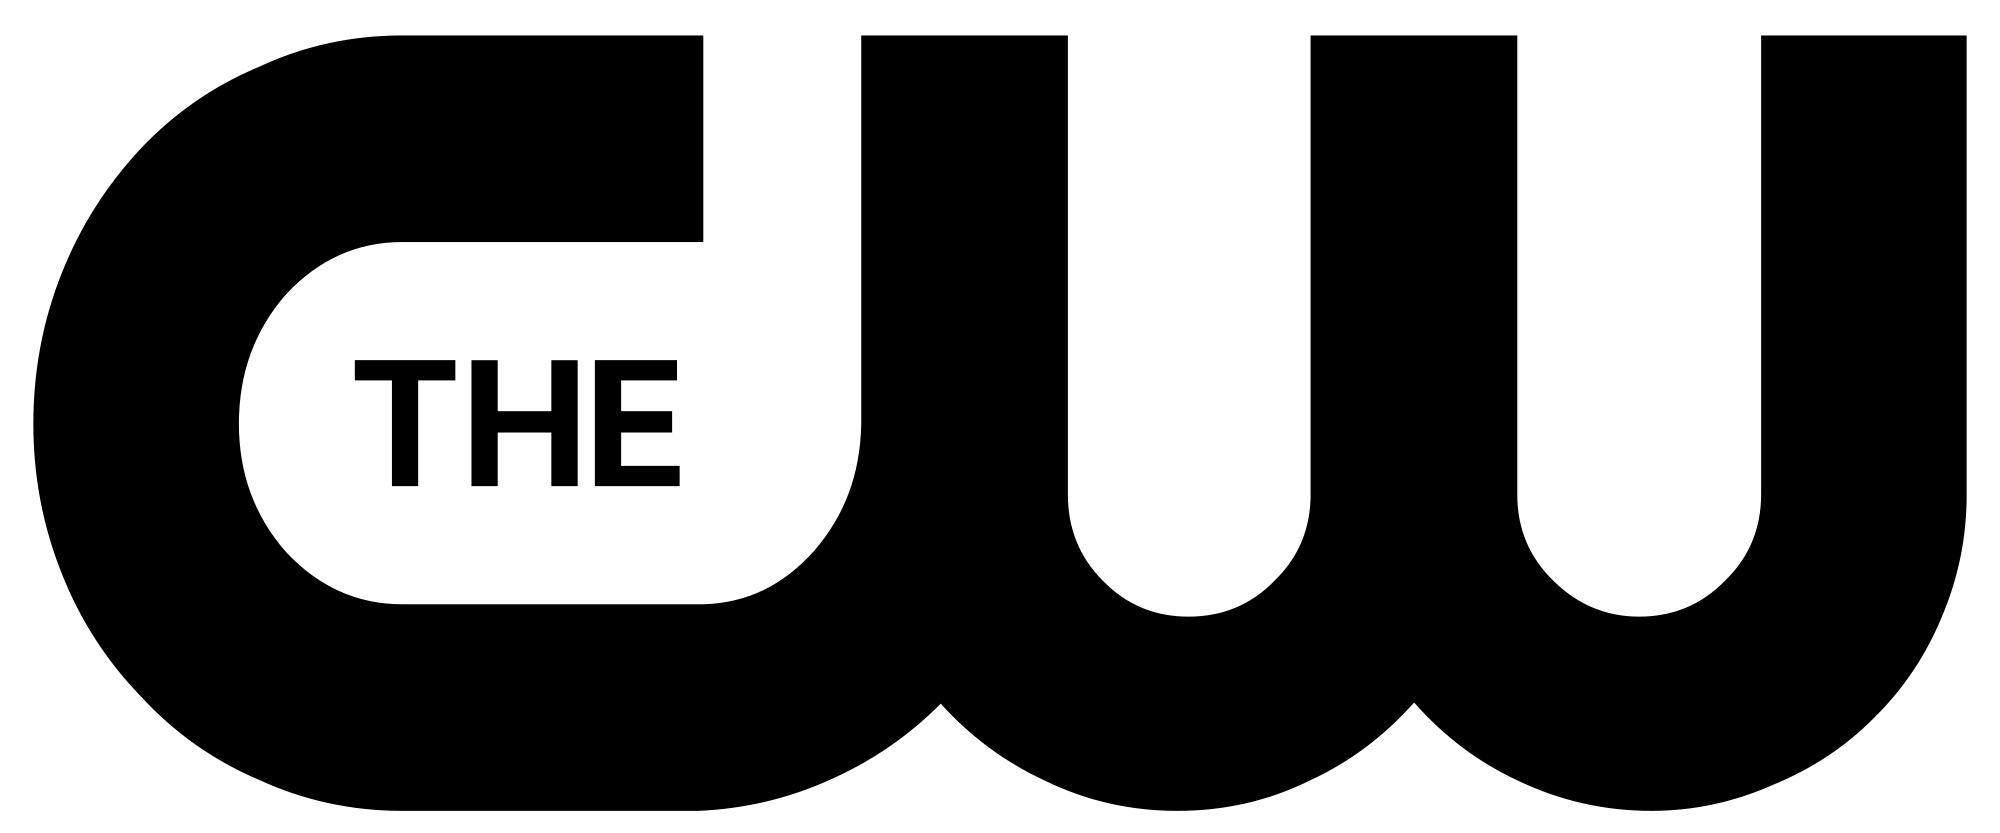 the cw logo black 2